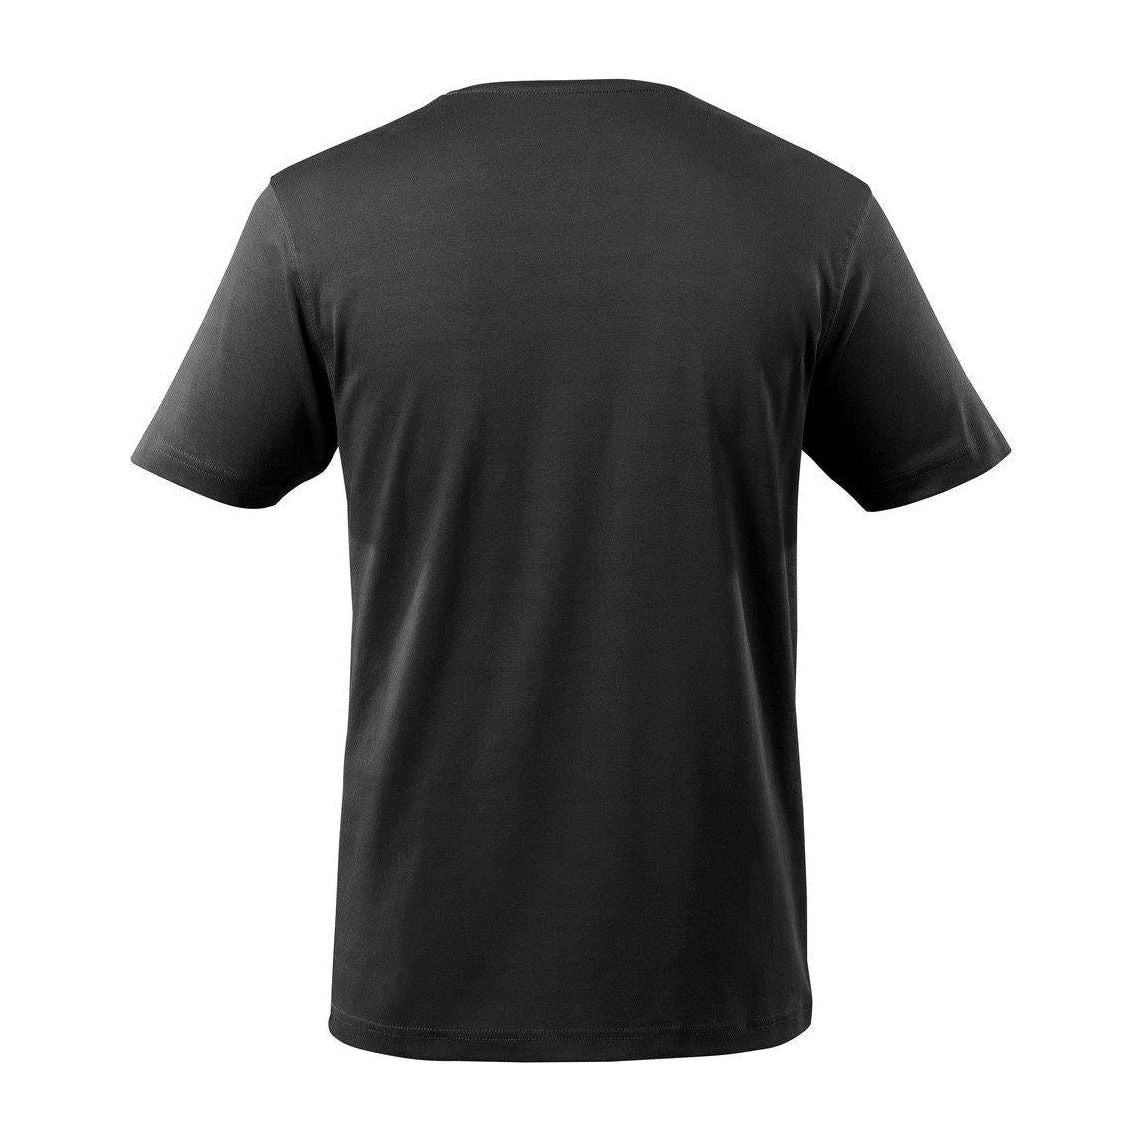 Mascot Vence T-shirt Slim-Fit Black 51585-967-09 Back